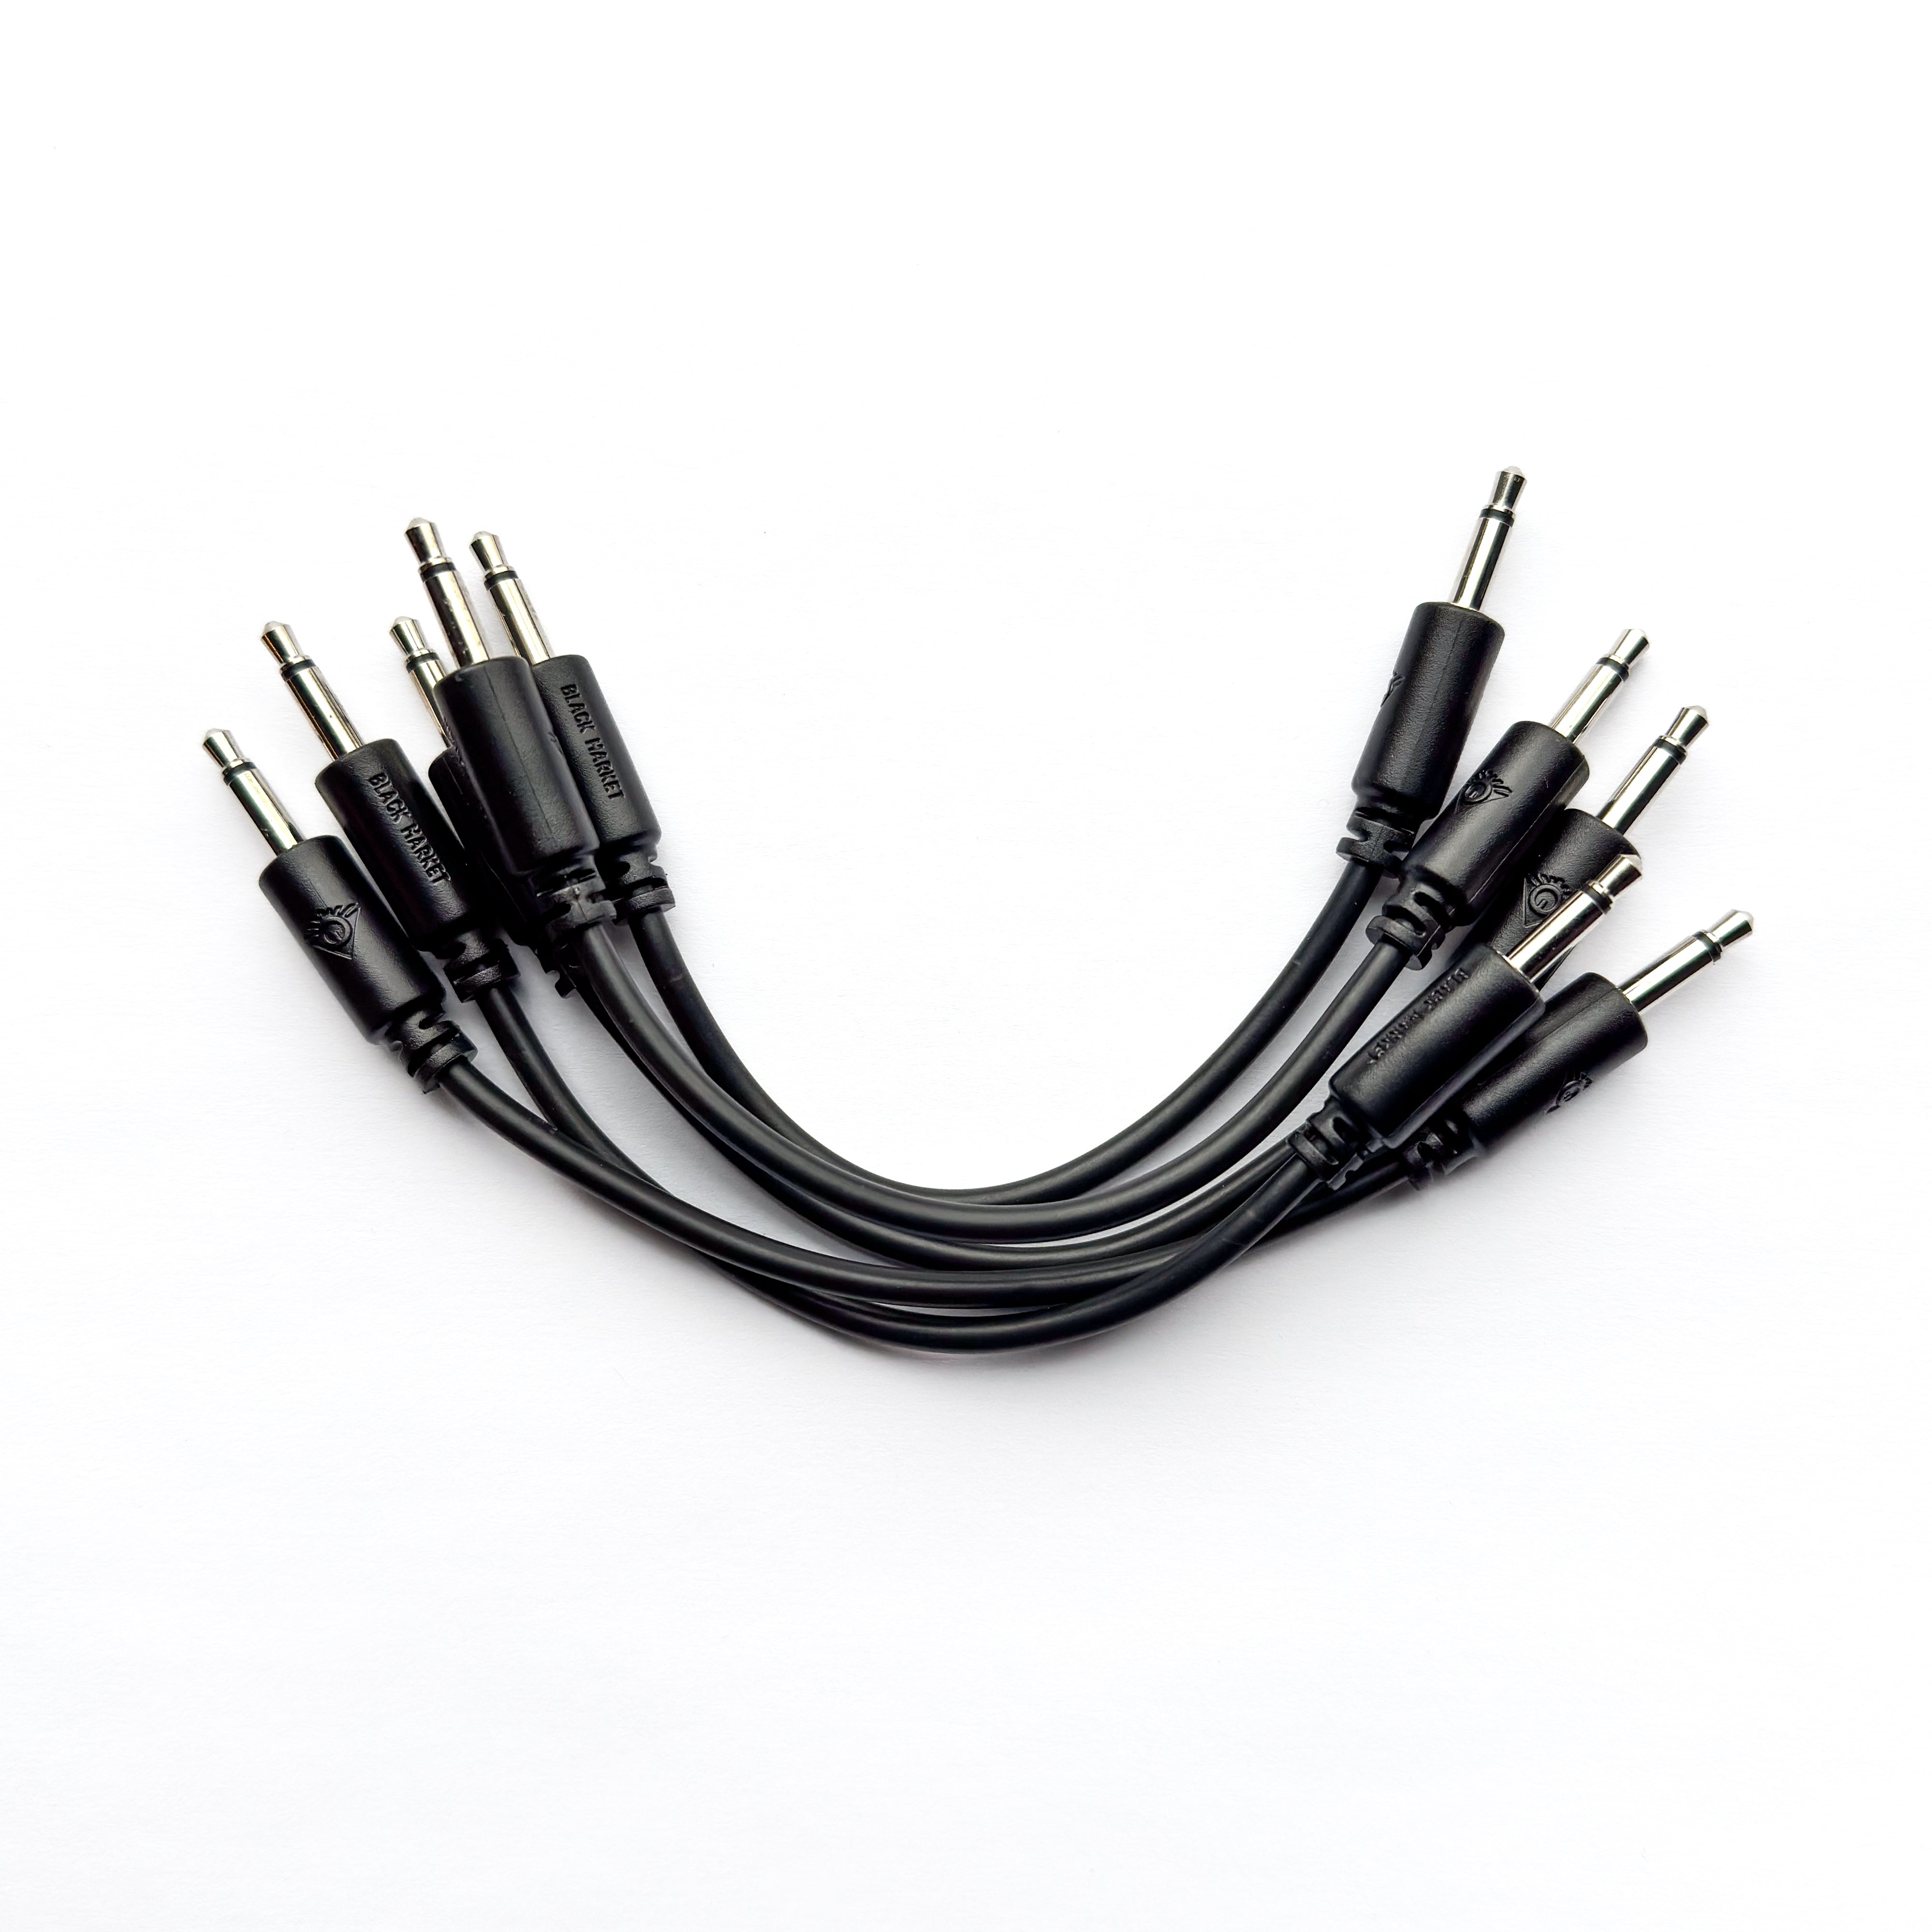 Black Market Modular 3.5mm Patch Cable 5-Pack - 9cm/3.5" - Black View 1